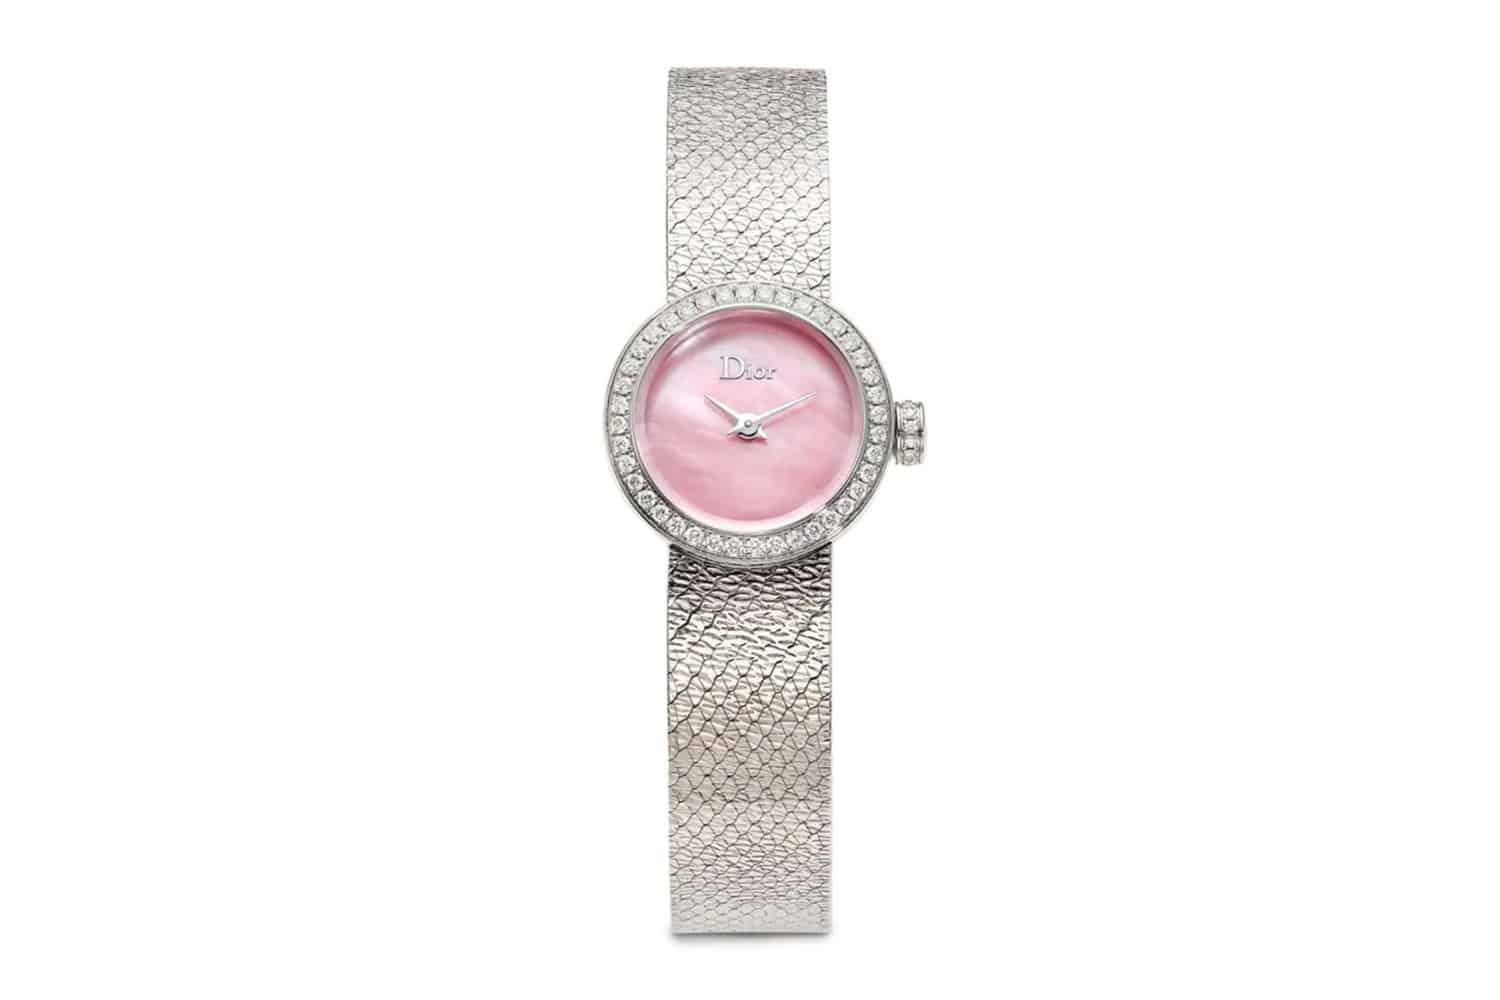 La-D-de-Dior-Diamond-Bracelet-Watch